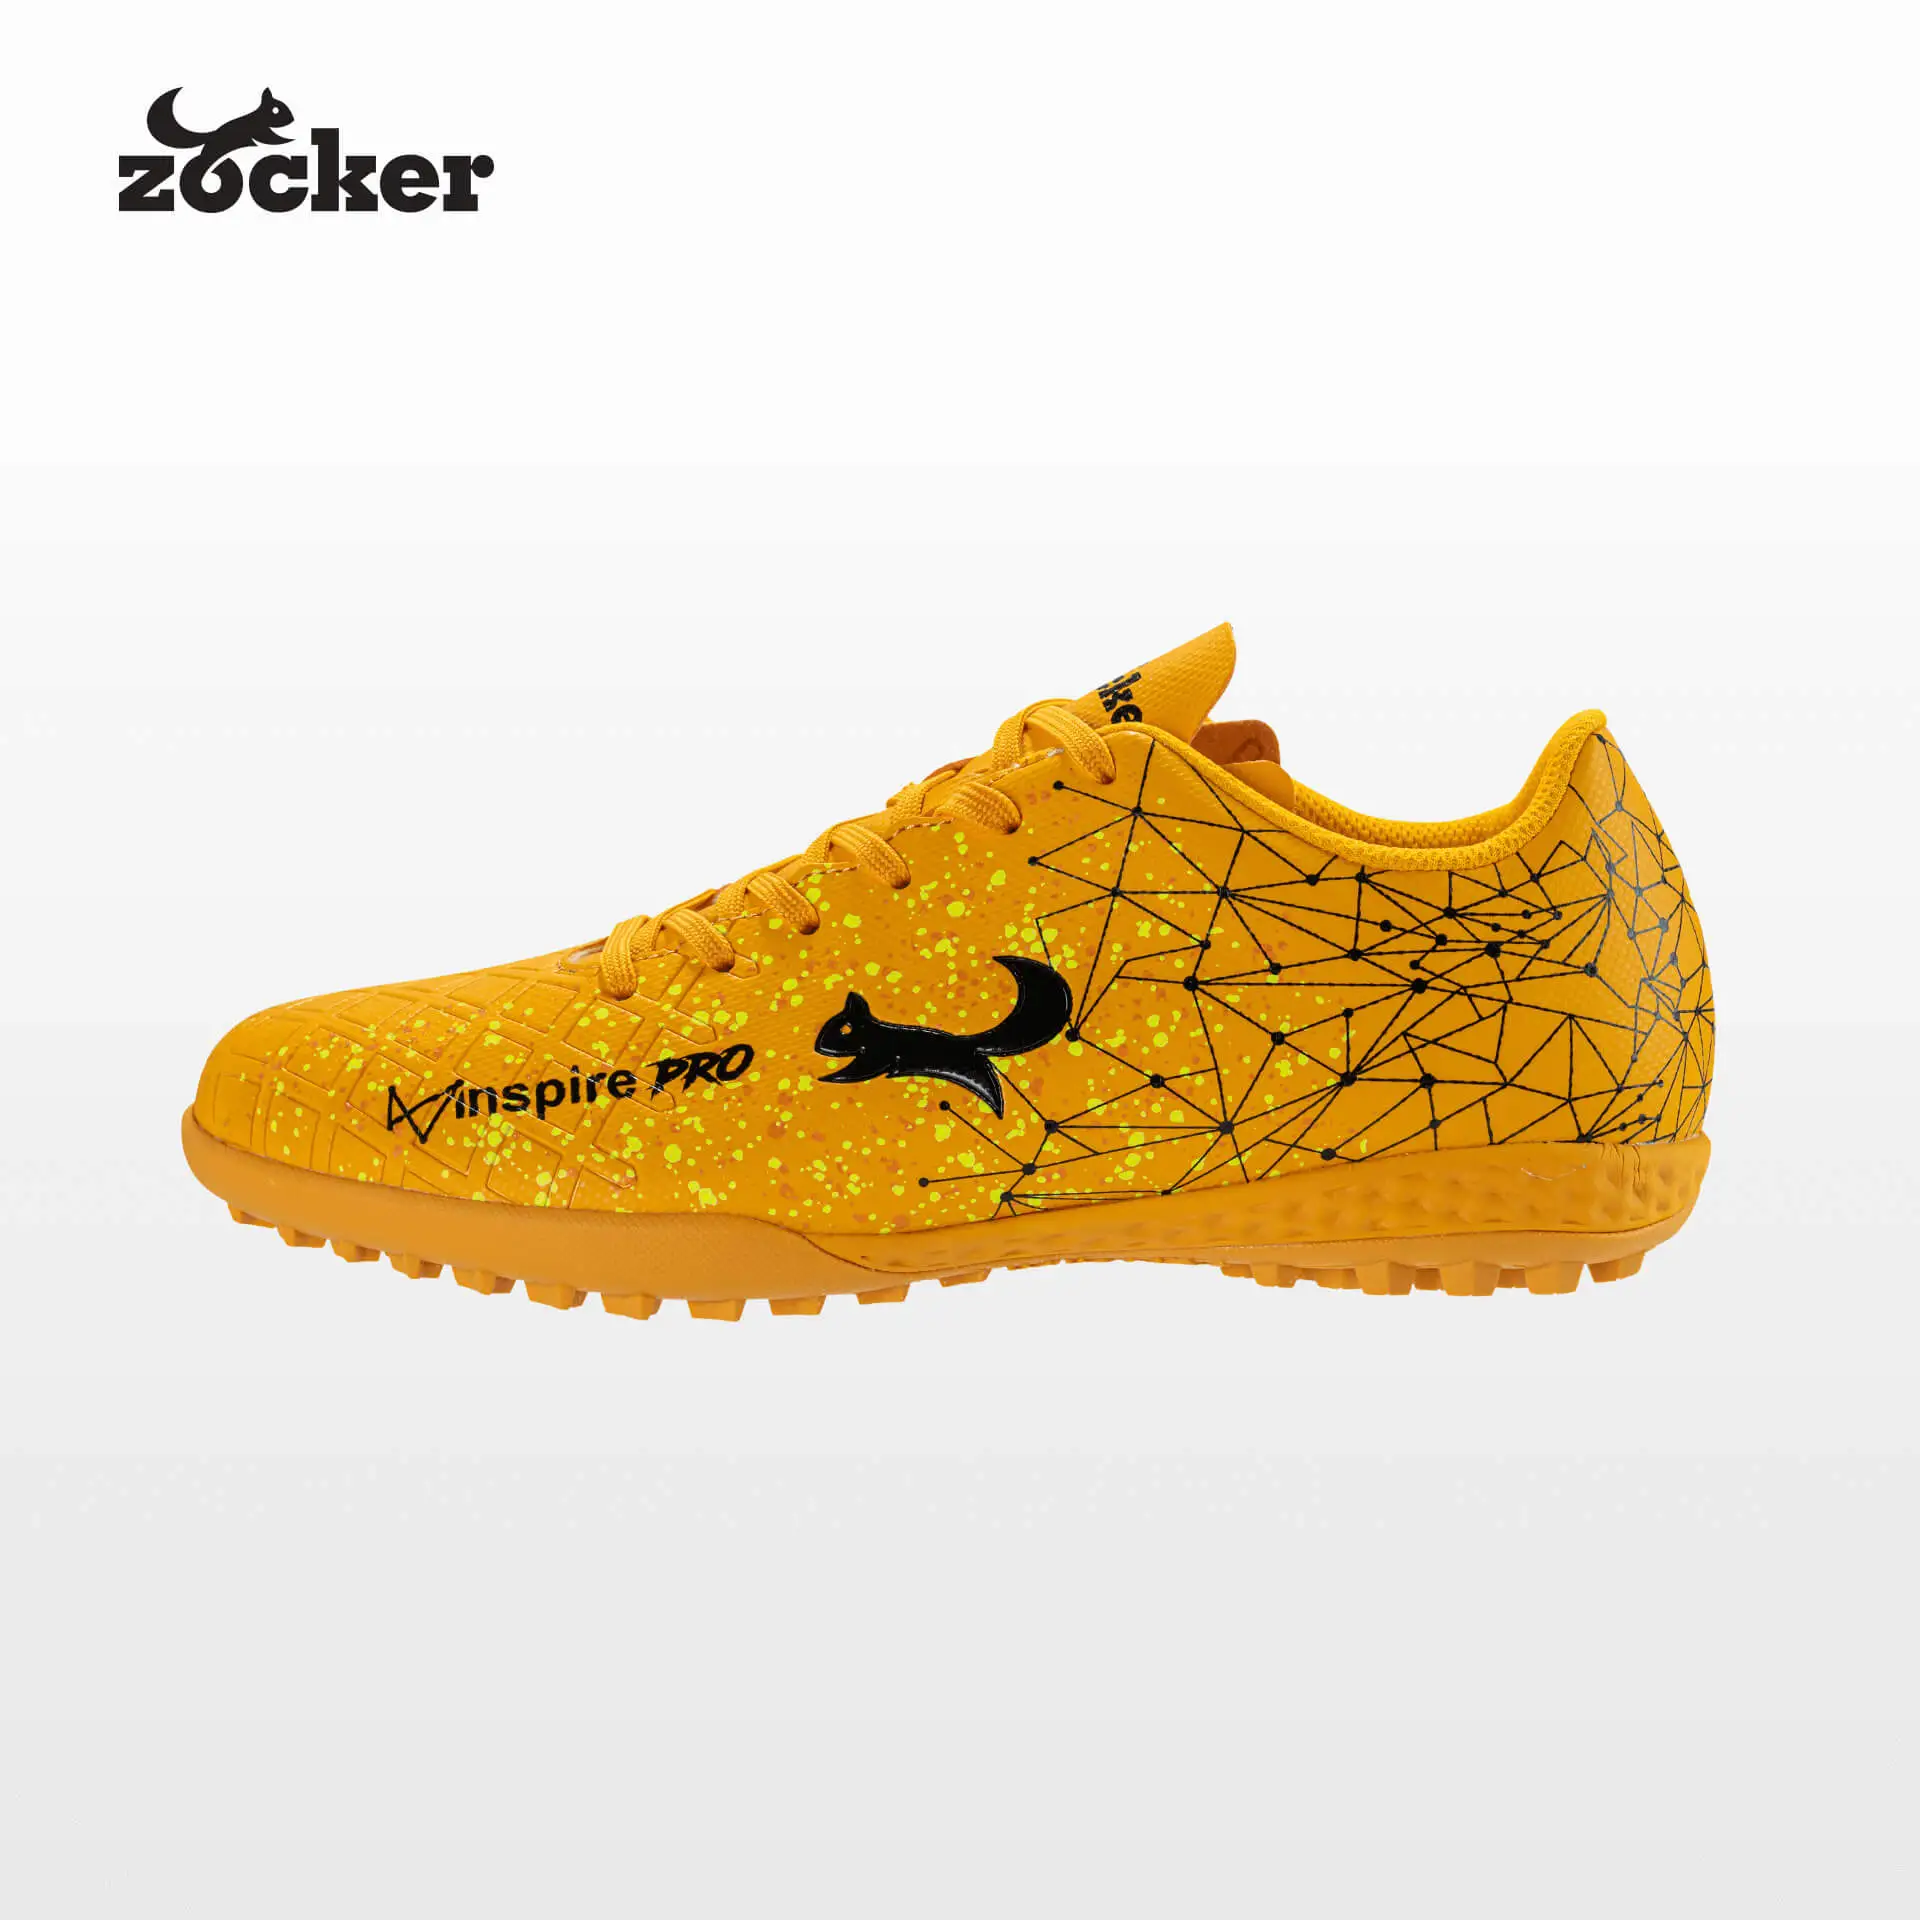 zocker-inspire-pro-cam_9football_shoes